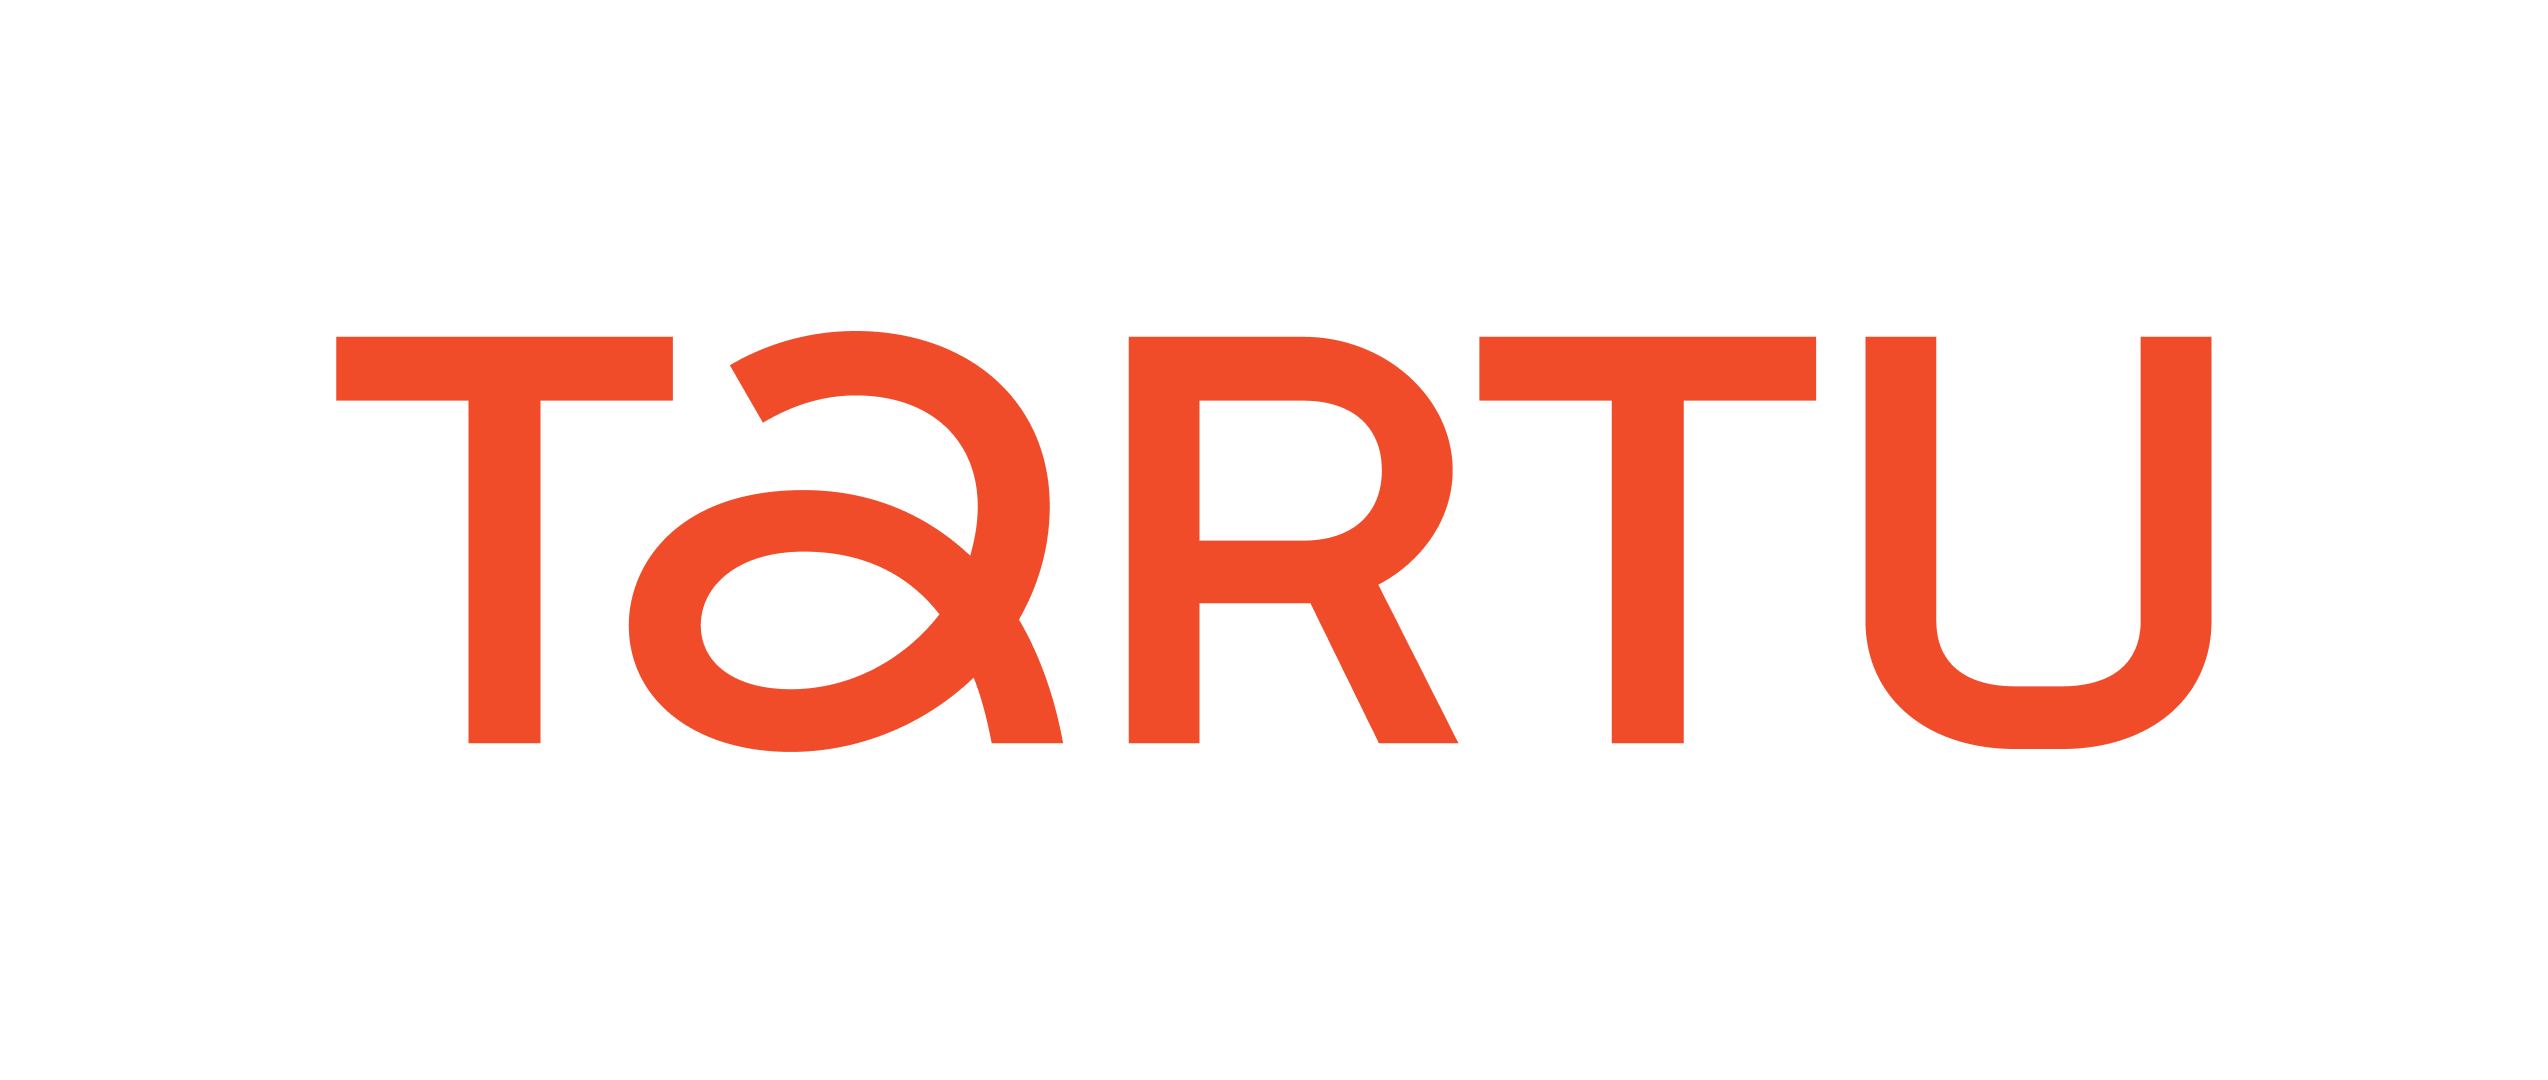 Tartu logo color RGB